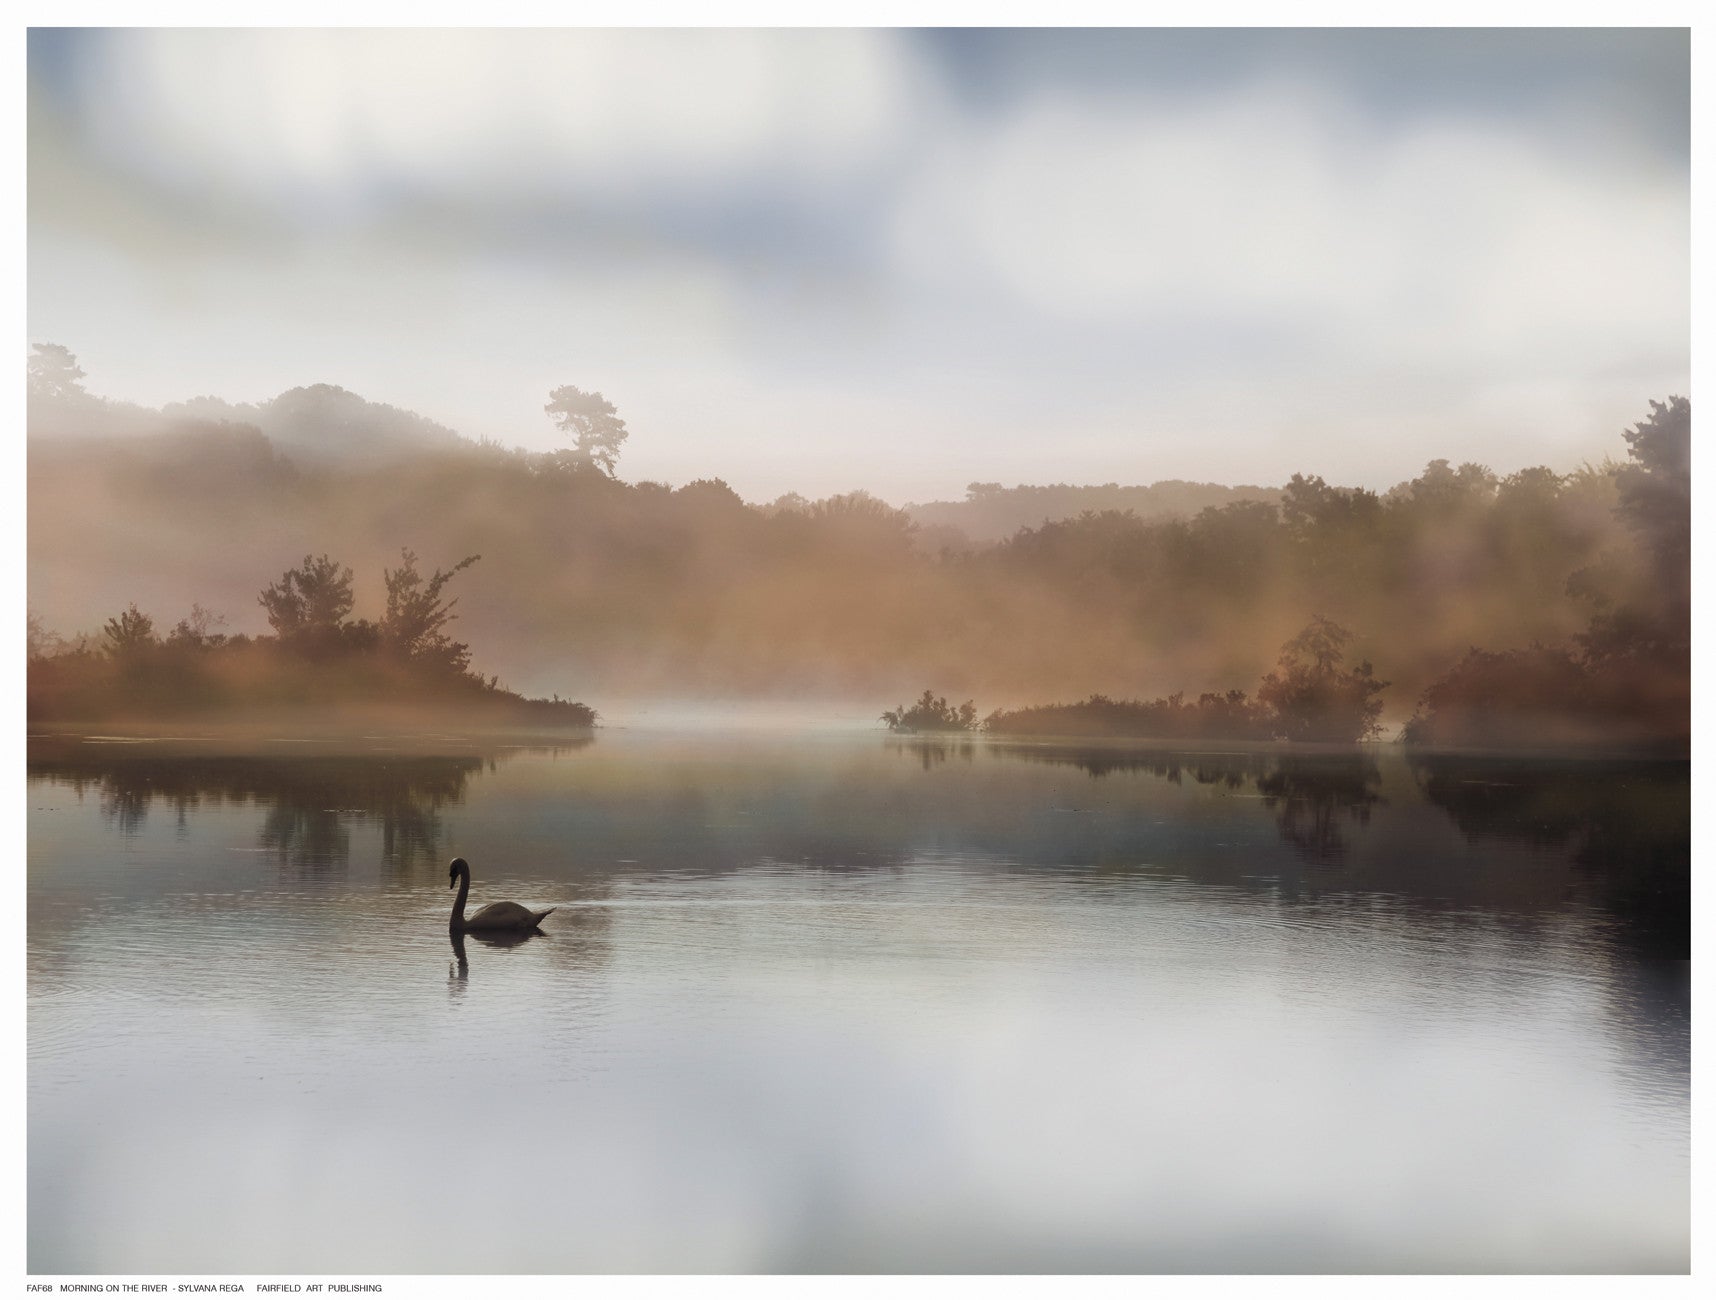 Morning on the River by S. Rega - FairField Art Publishing